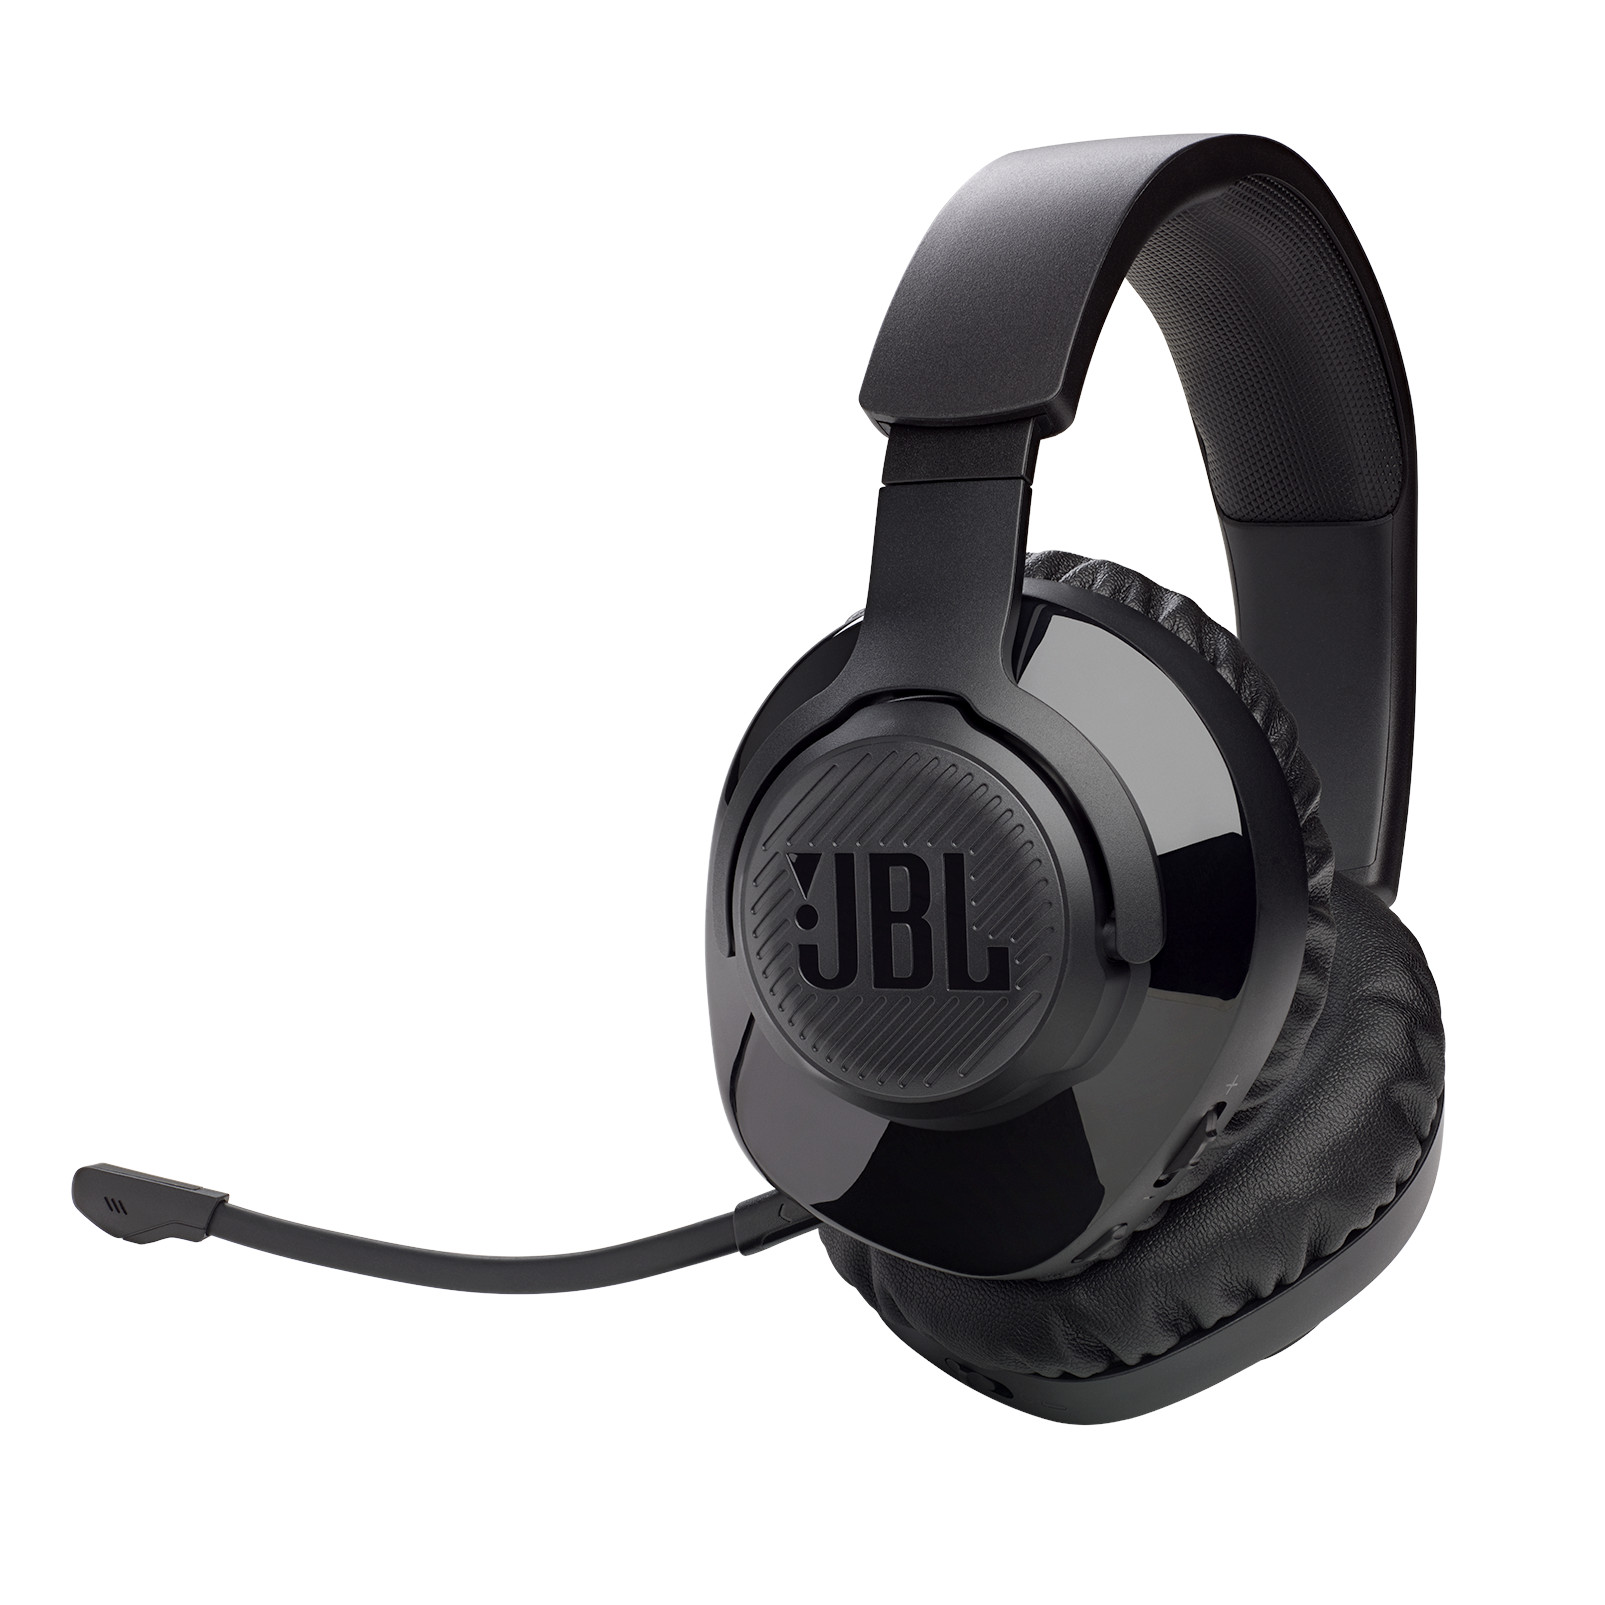 The JBL Quantum 350 wireless headphones.